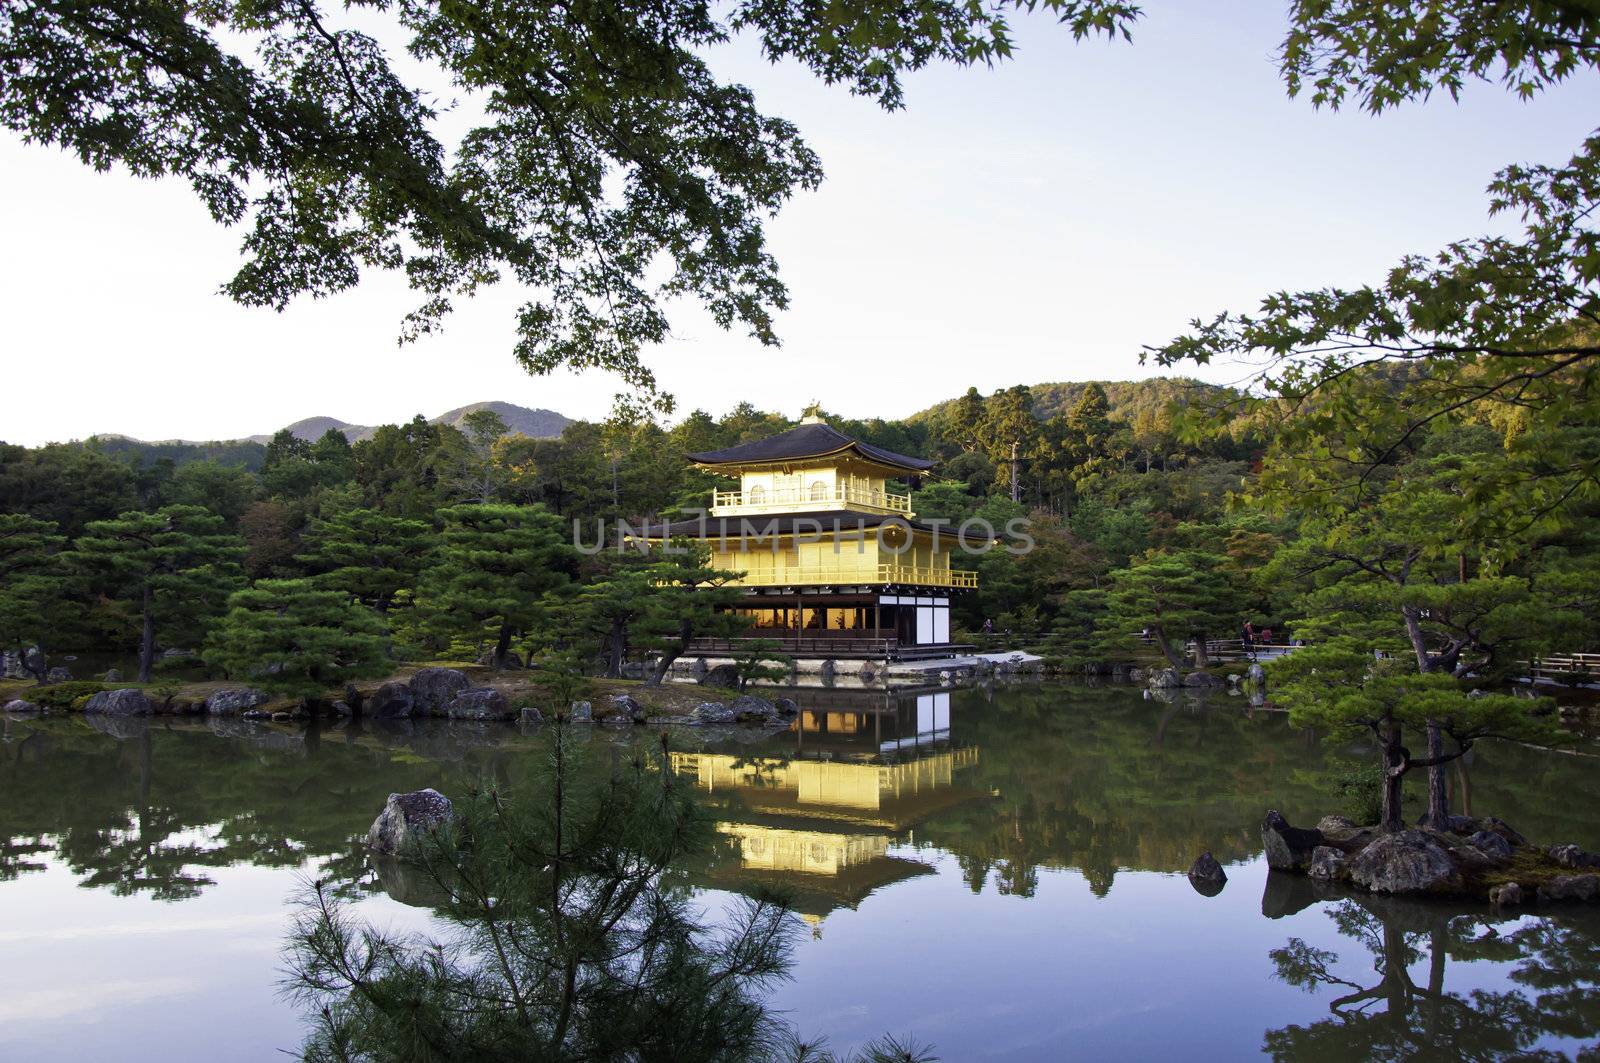 Kinkakuji in autumn season - the famous Golden Pavilion at Kyoto, Japan. 